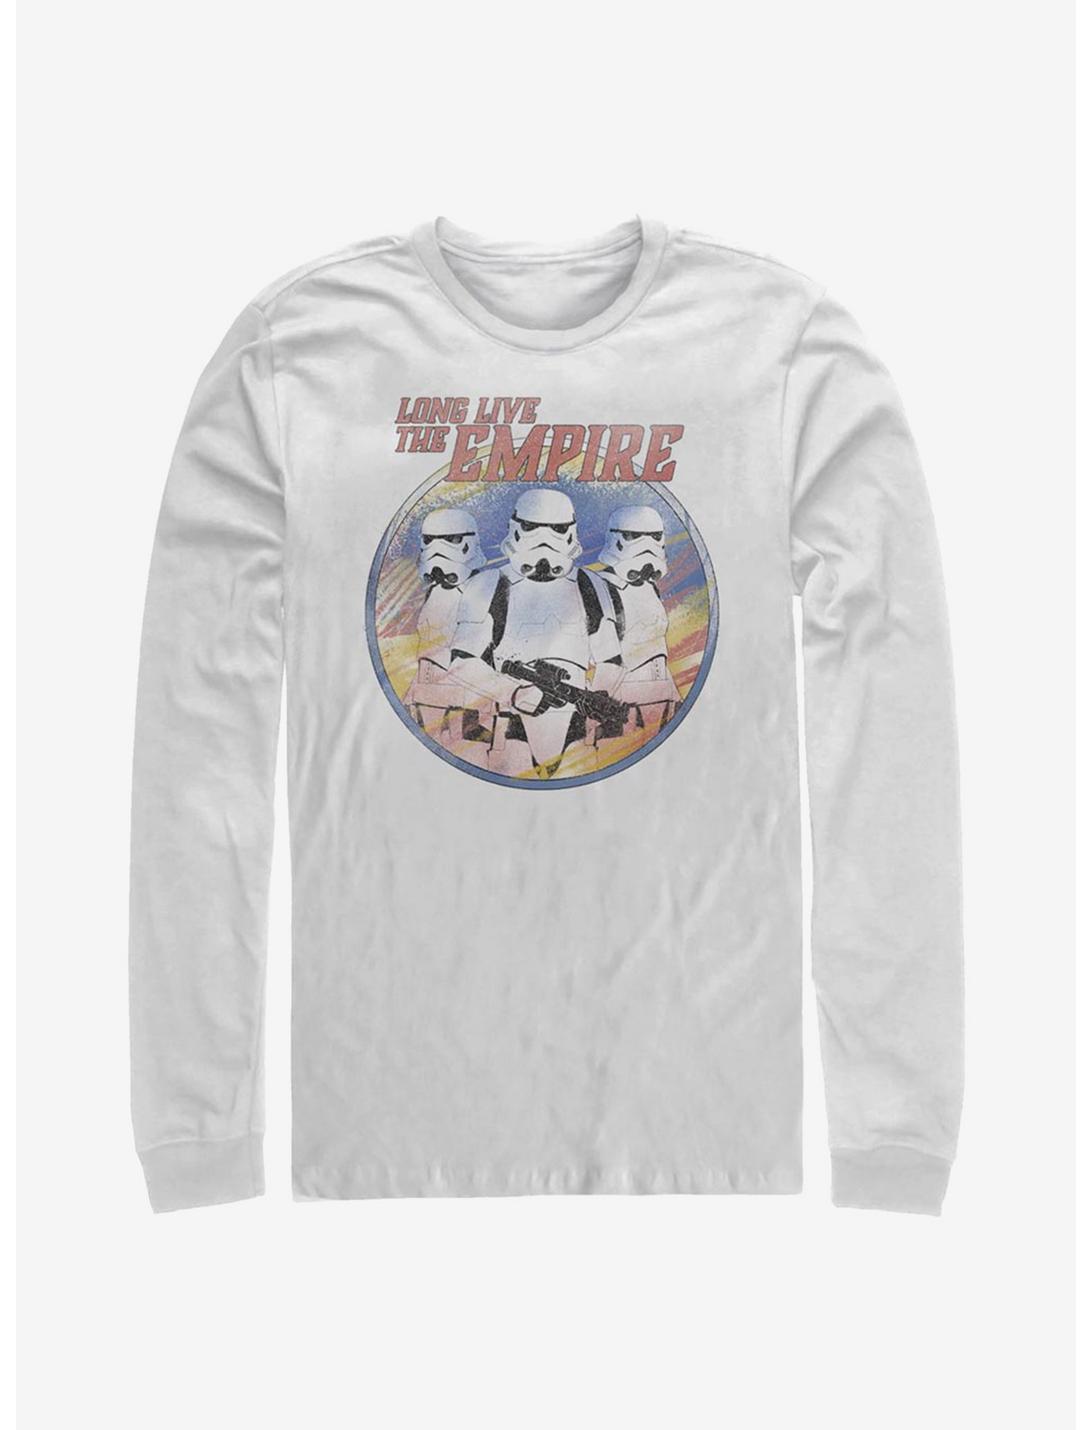 Star Wars The Mandalorian Long Live the Empire Long-Sleeve T-Shirt, WHITE, hi-res